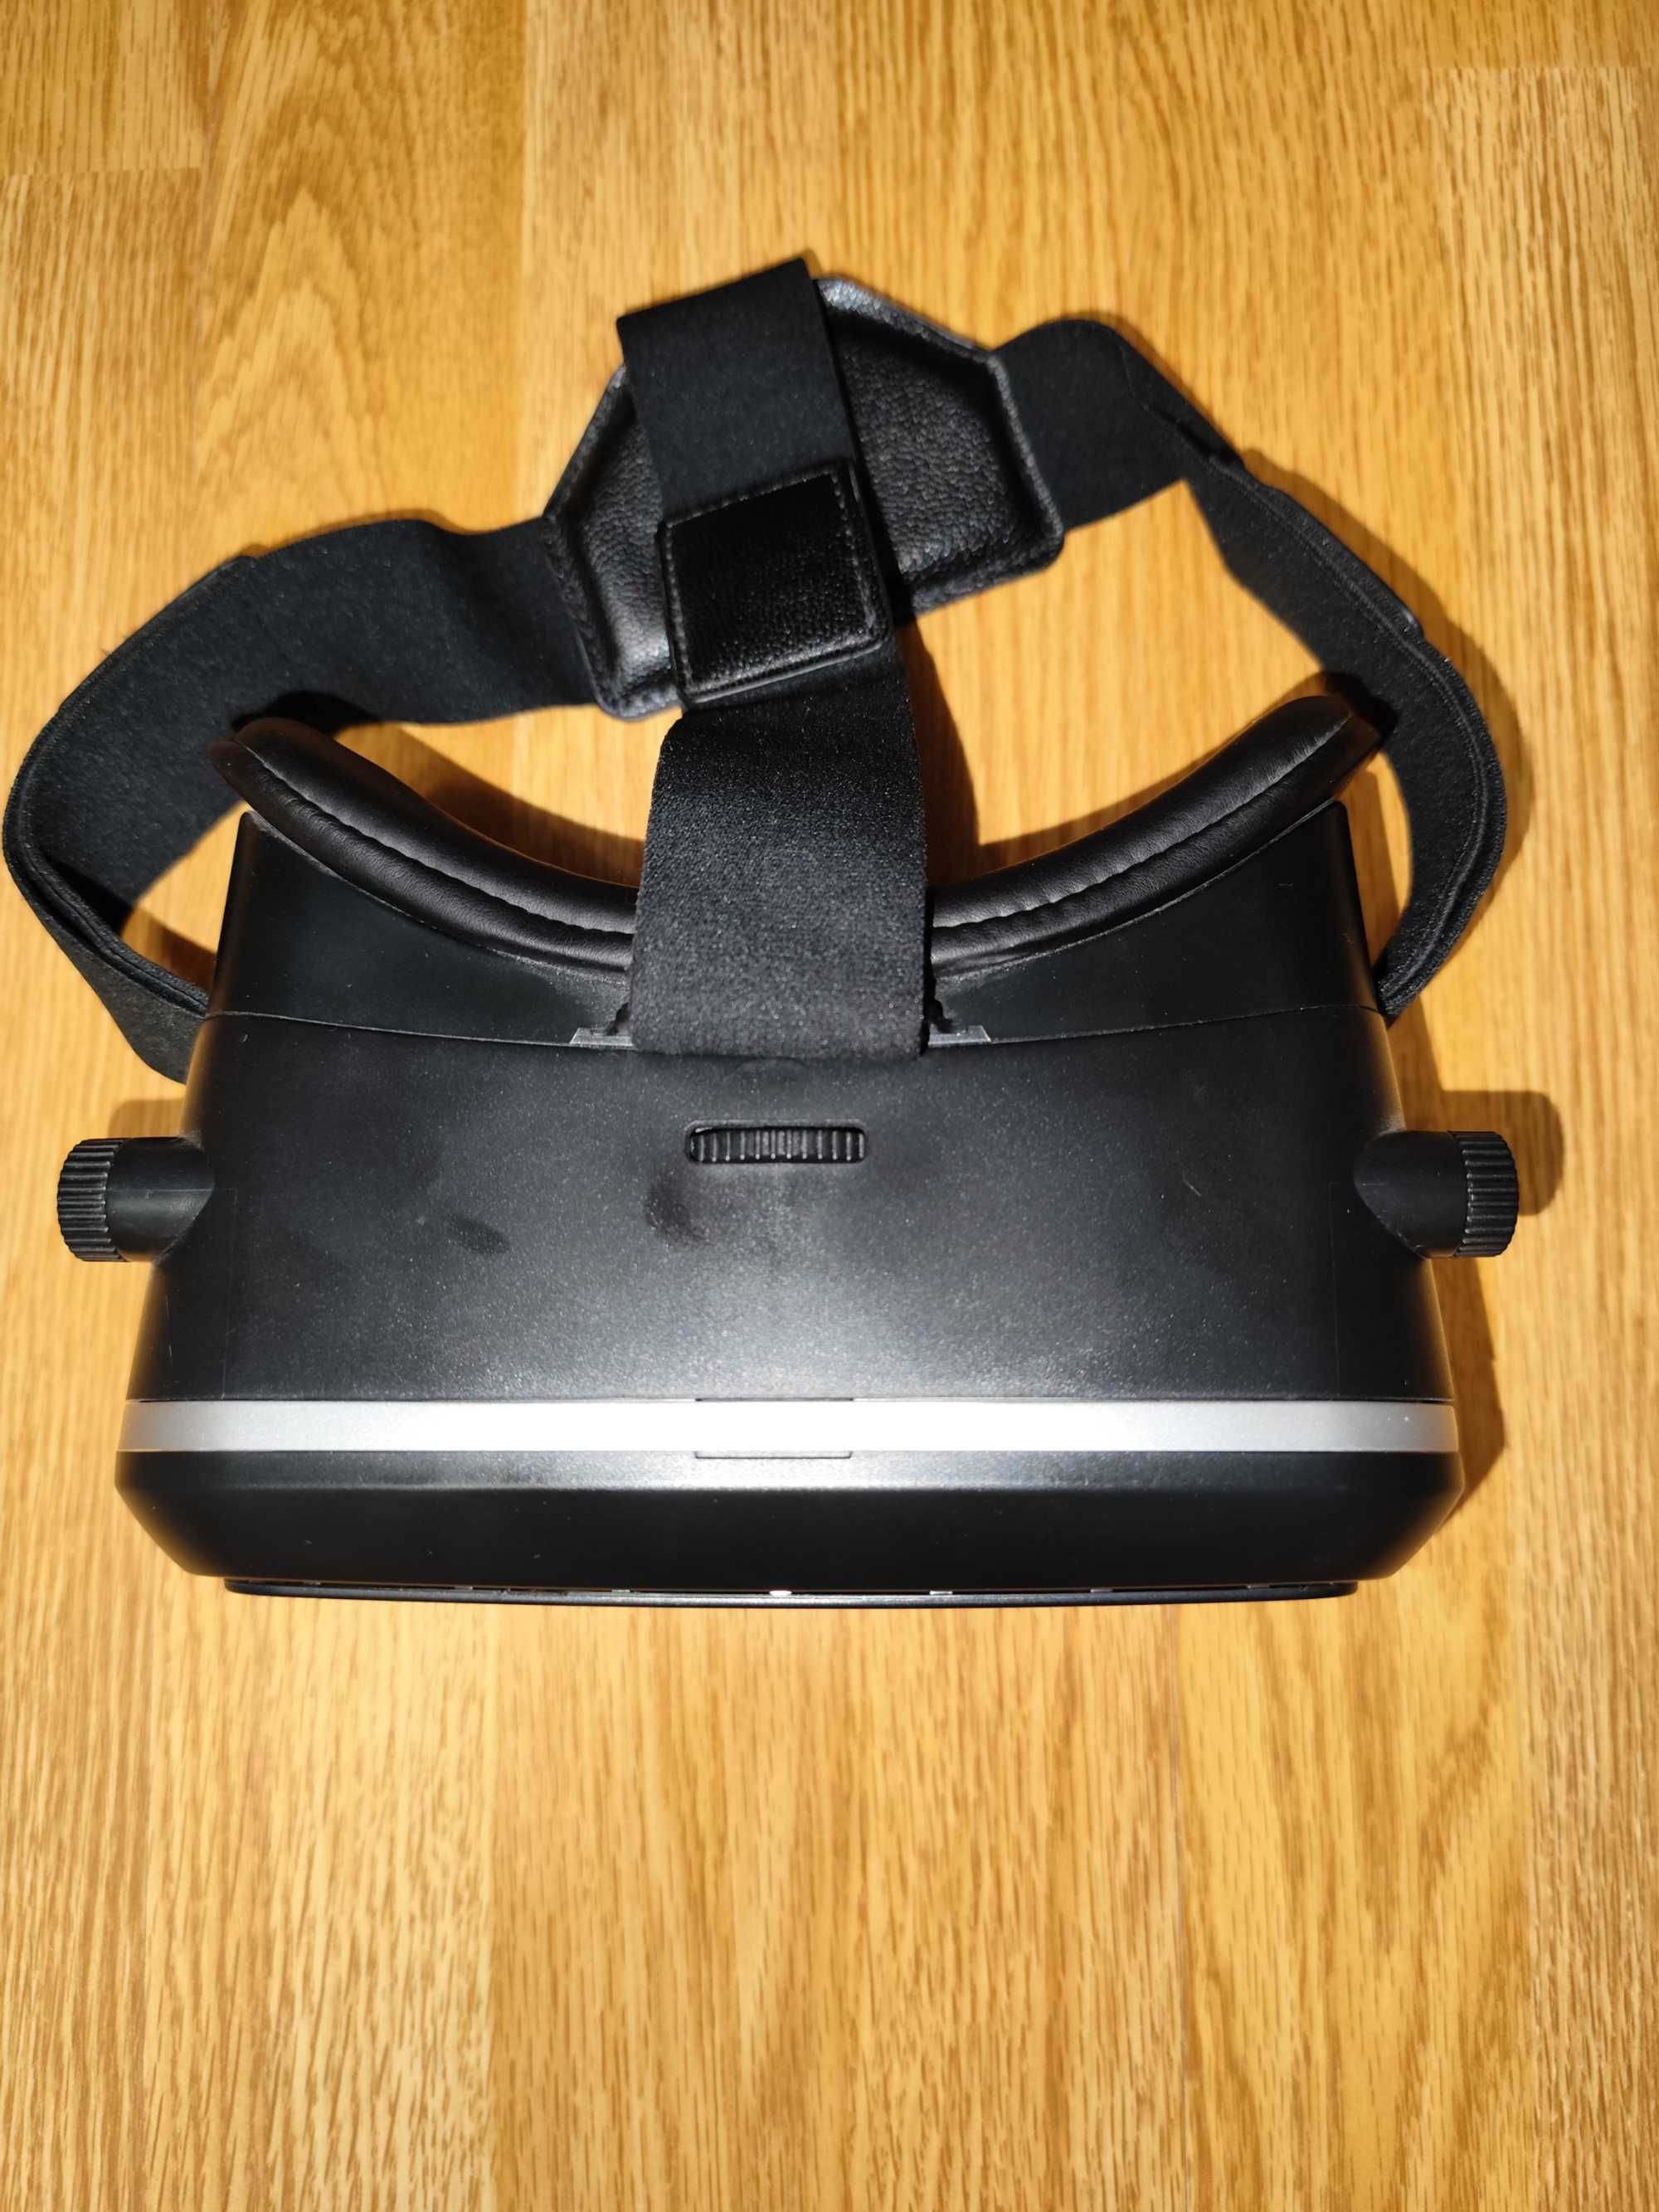 VR virtual reality glasses